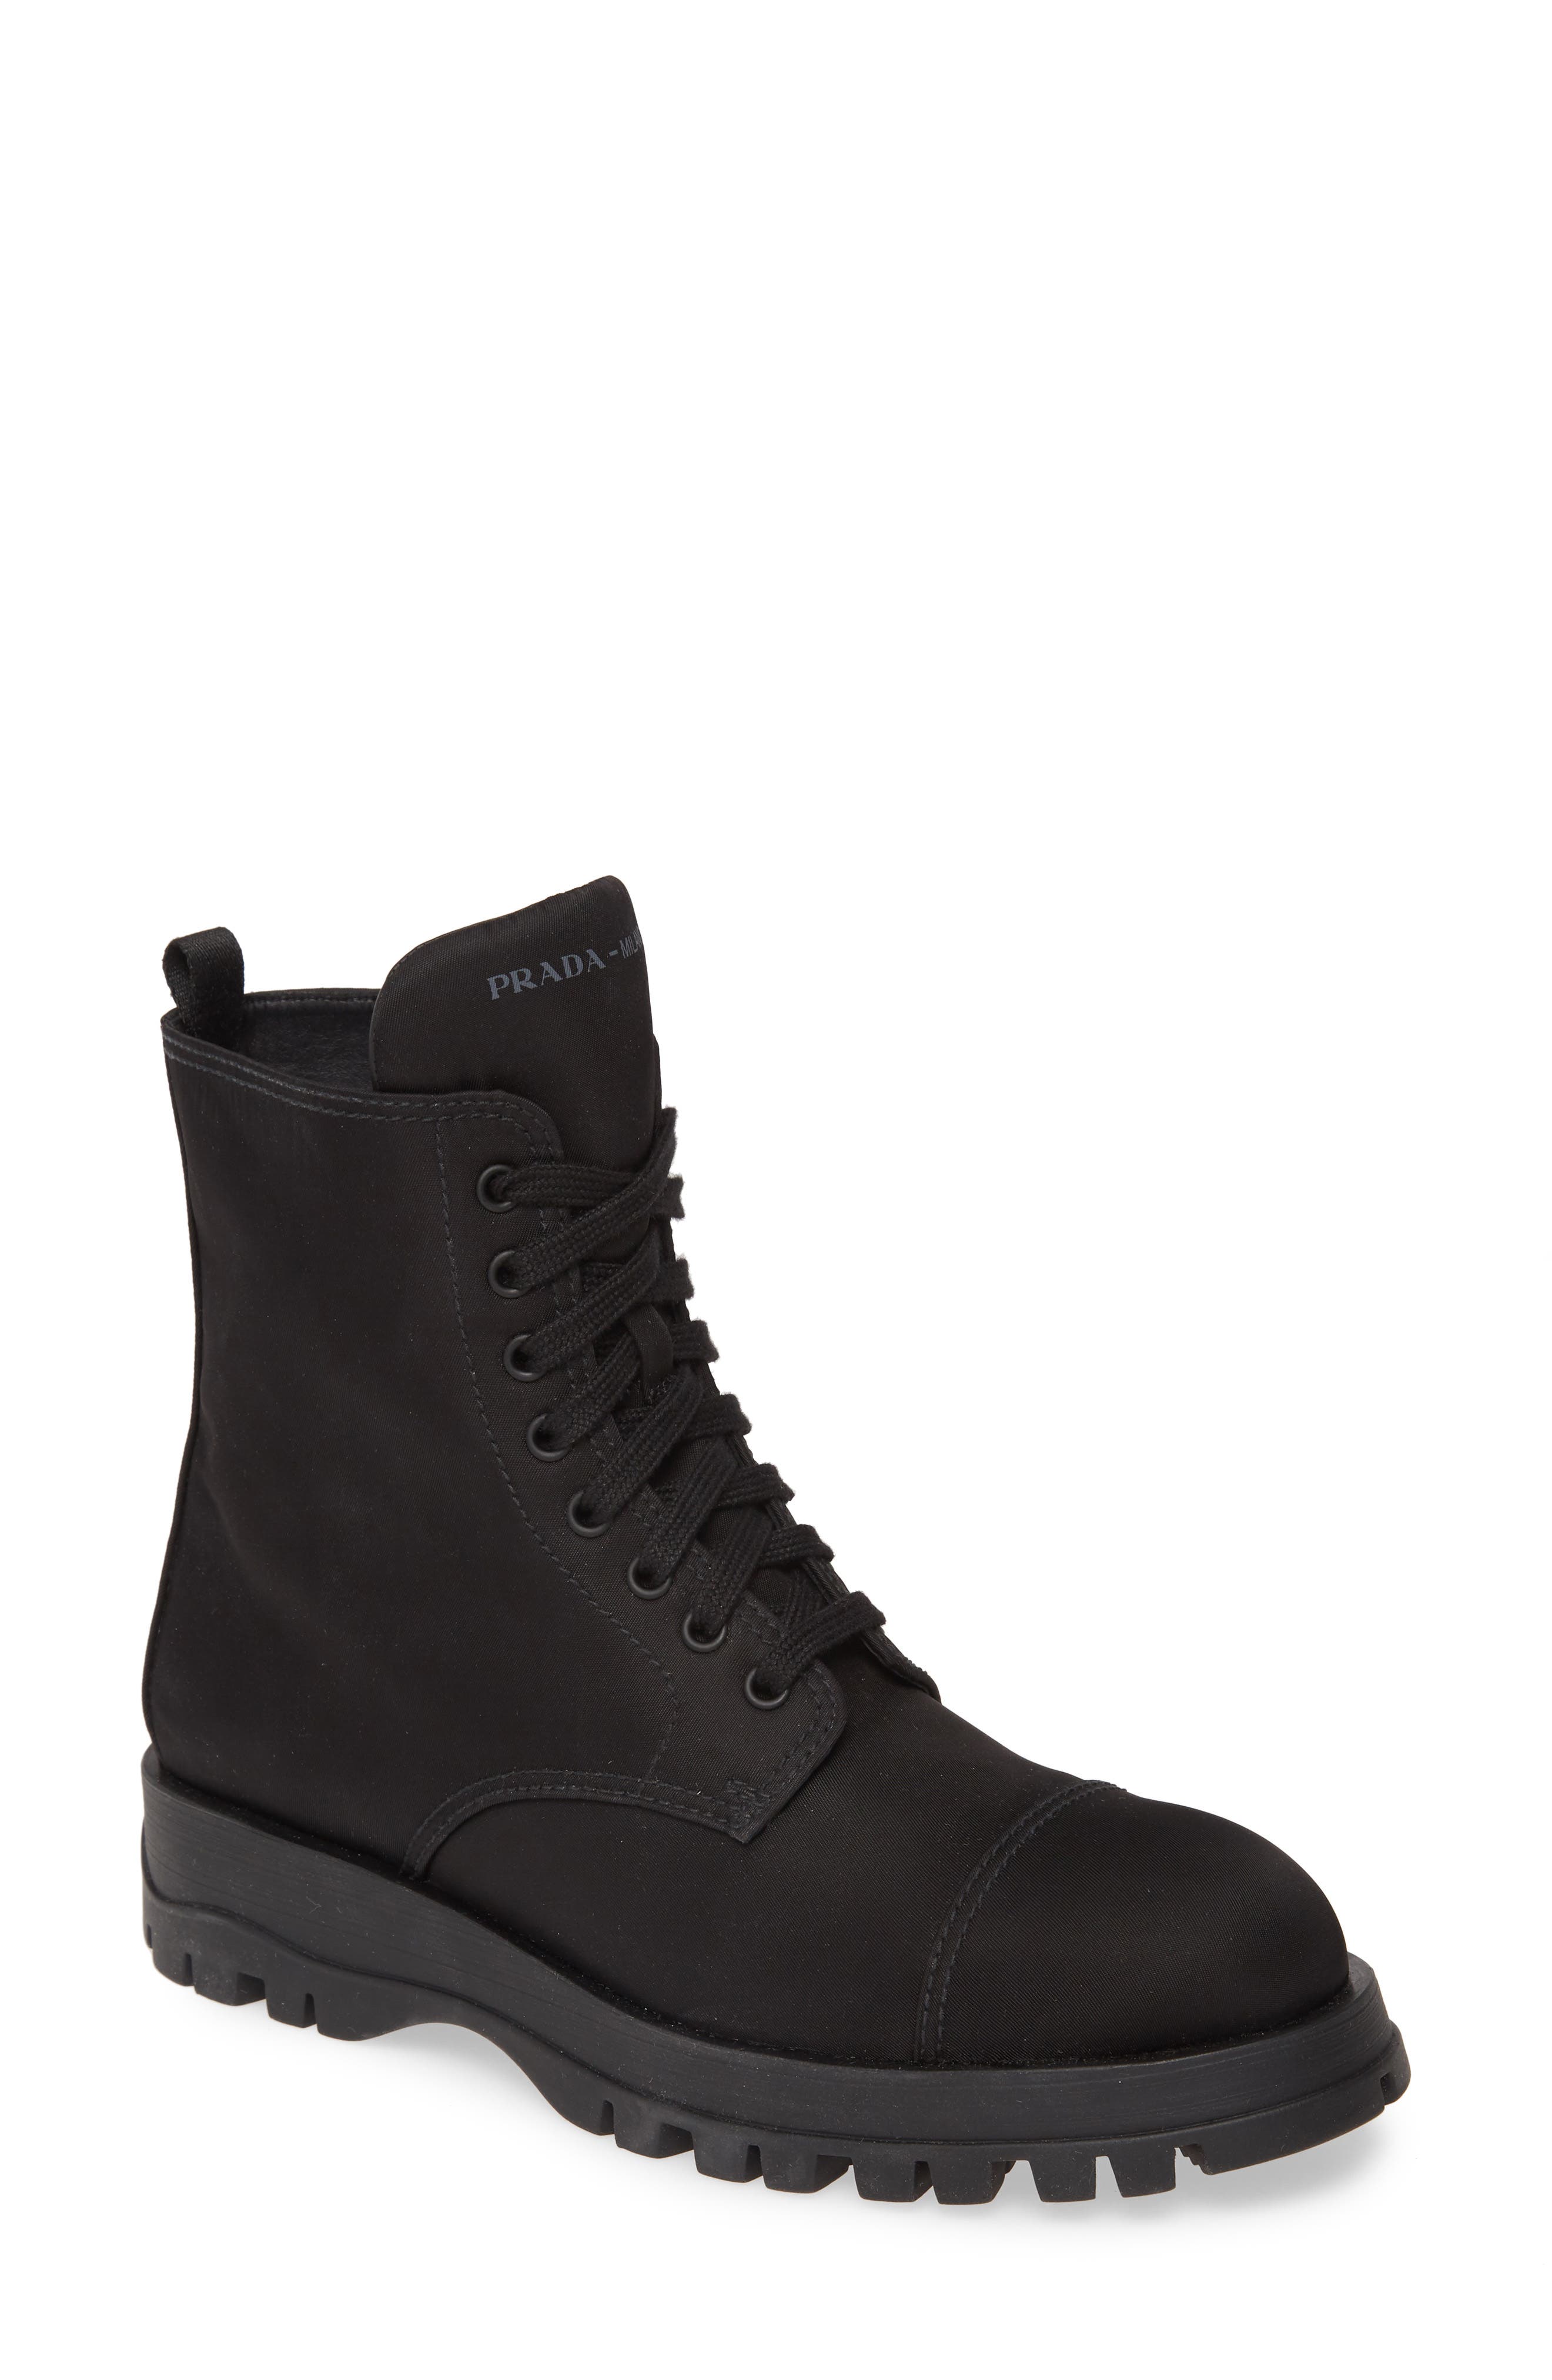 nordstrom black combat boots